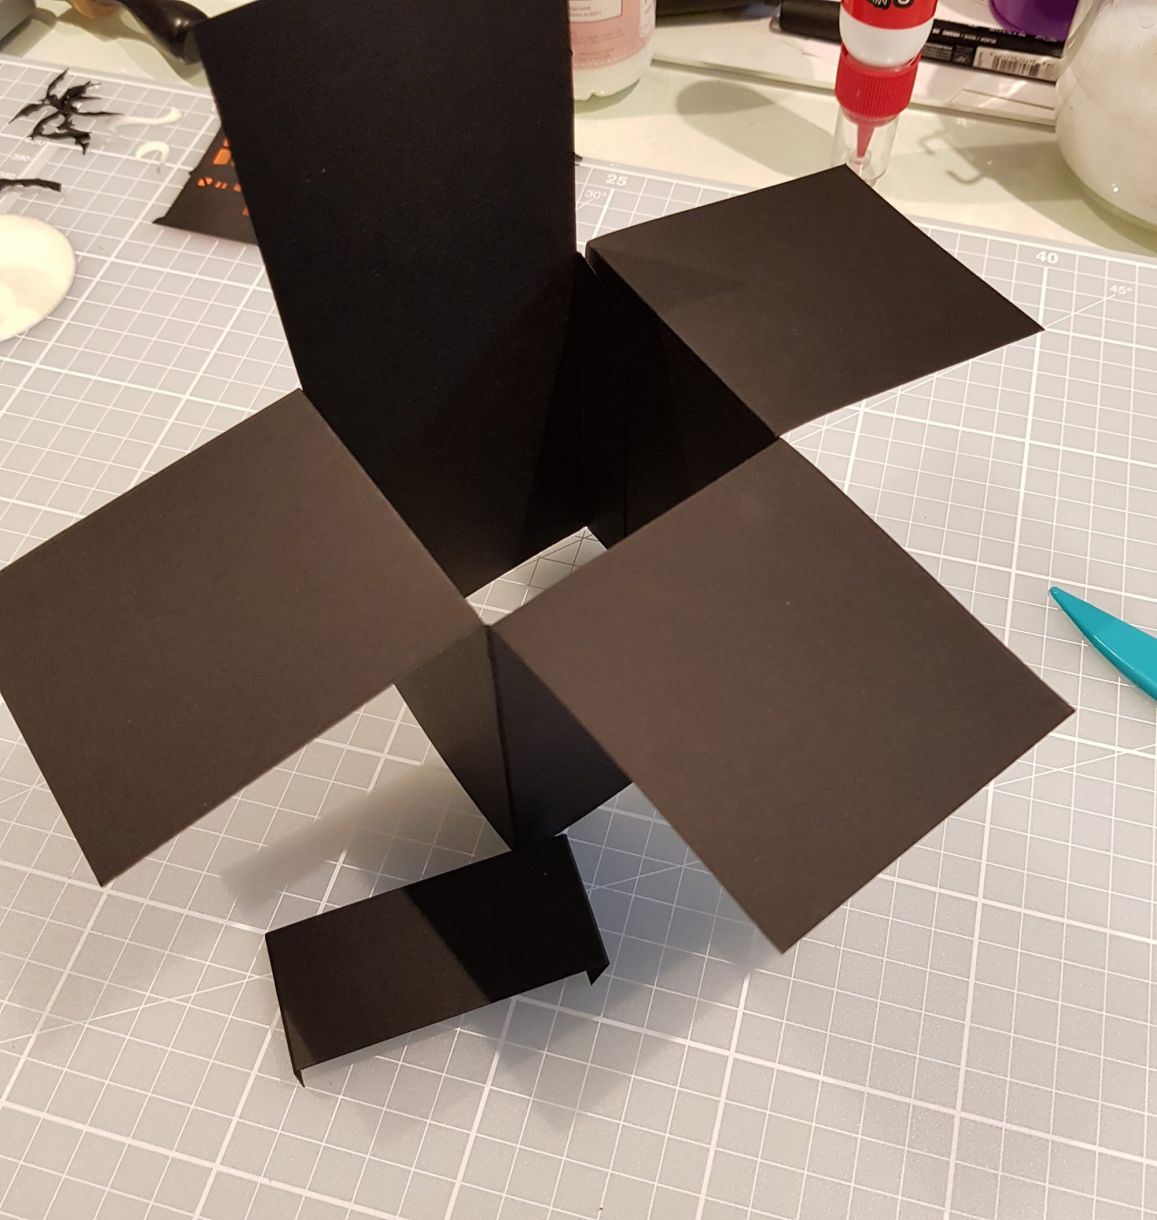 Shape and Glue to Create Box